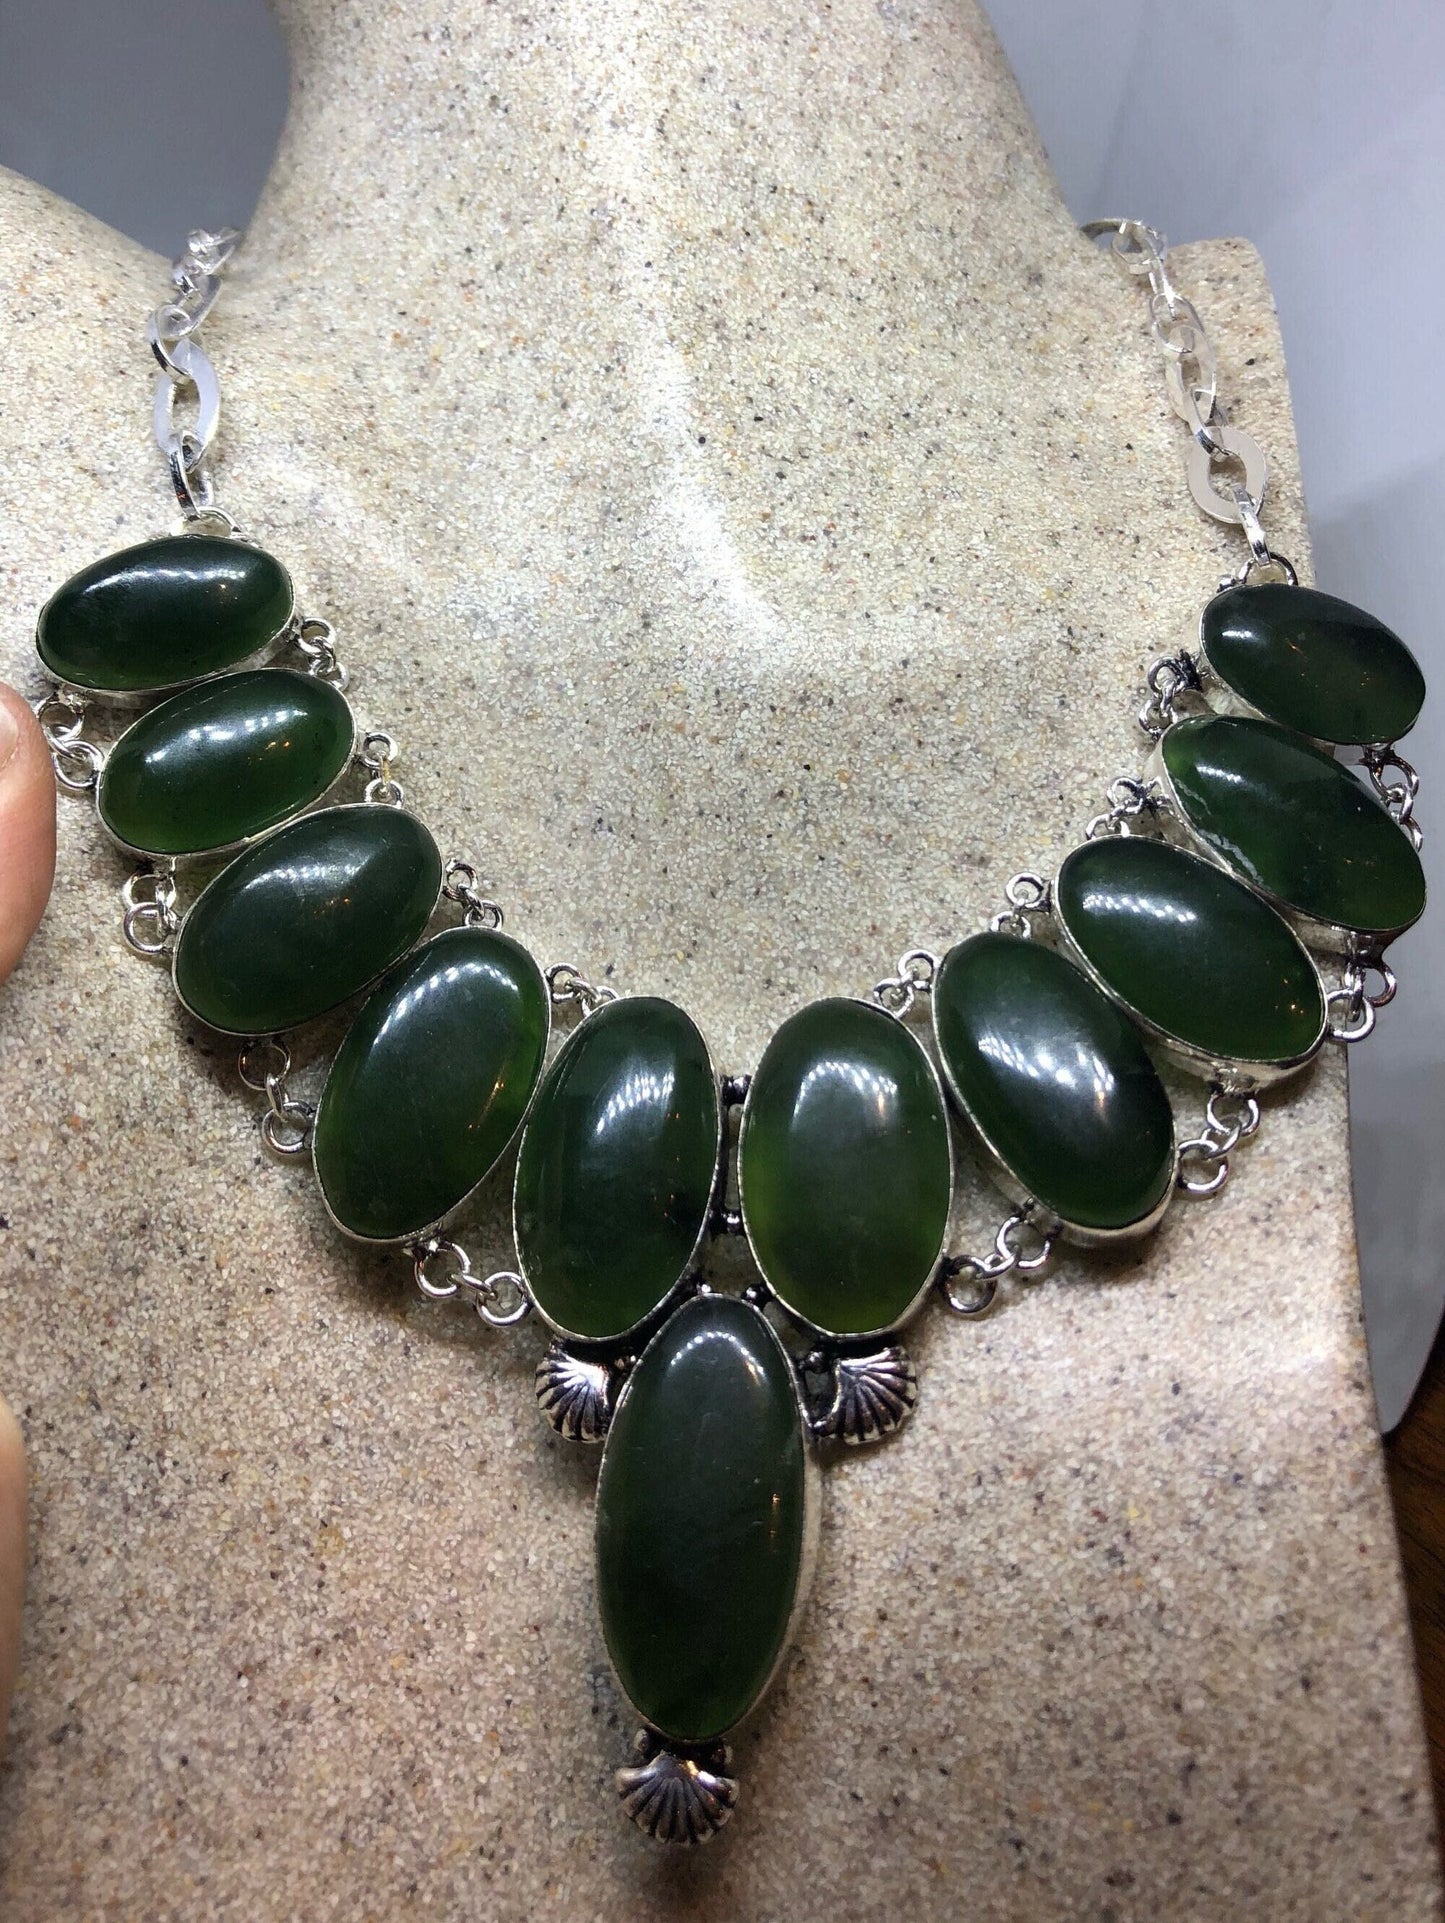 Vintage Silver Genuine Green Nephrite Jade Gemstone Necklace.